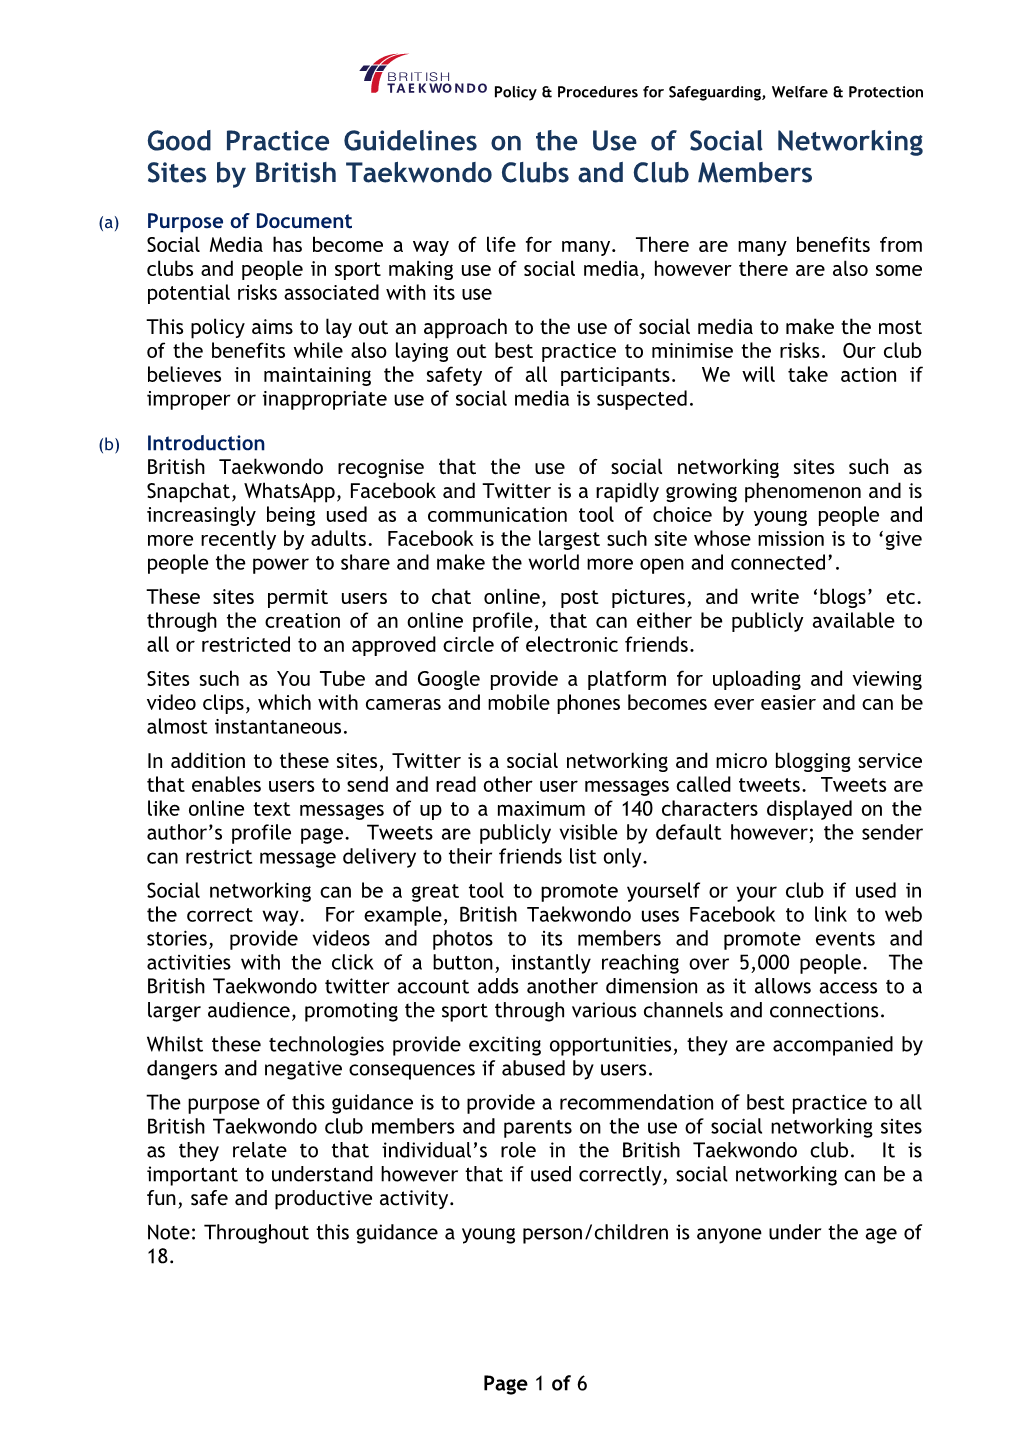 BTCB Policy & Procedures Manual 2005